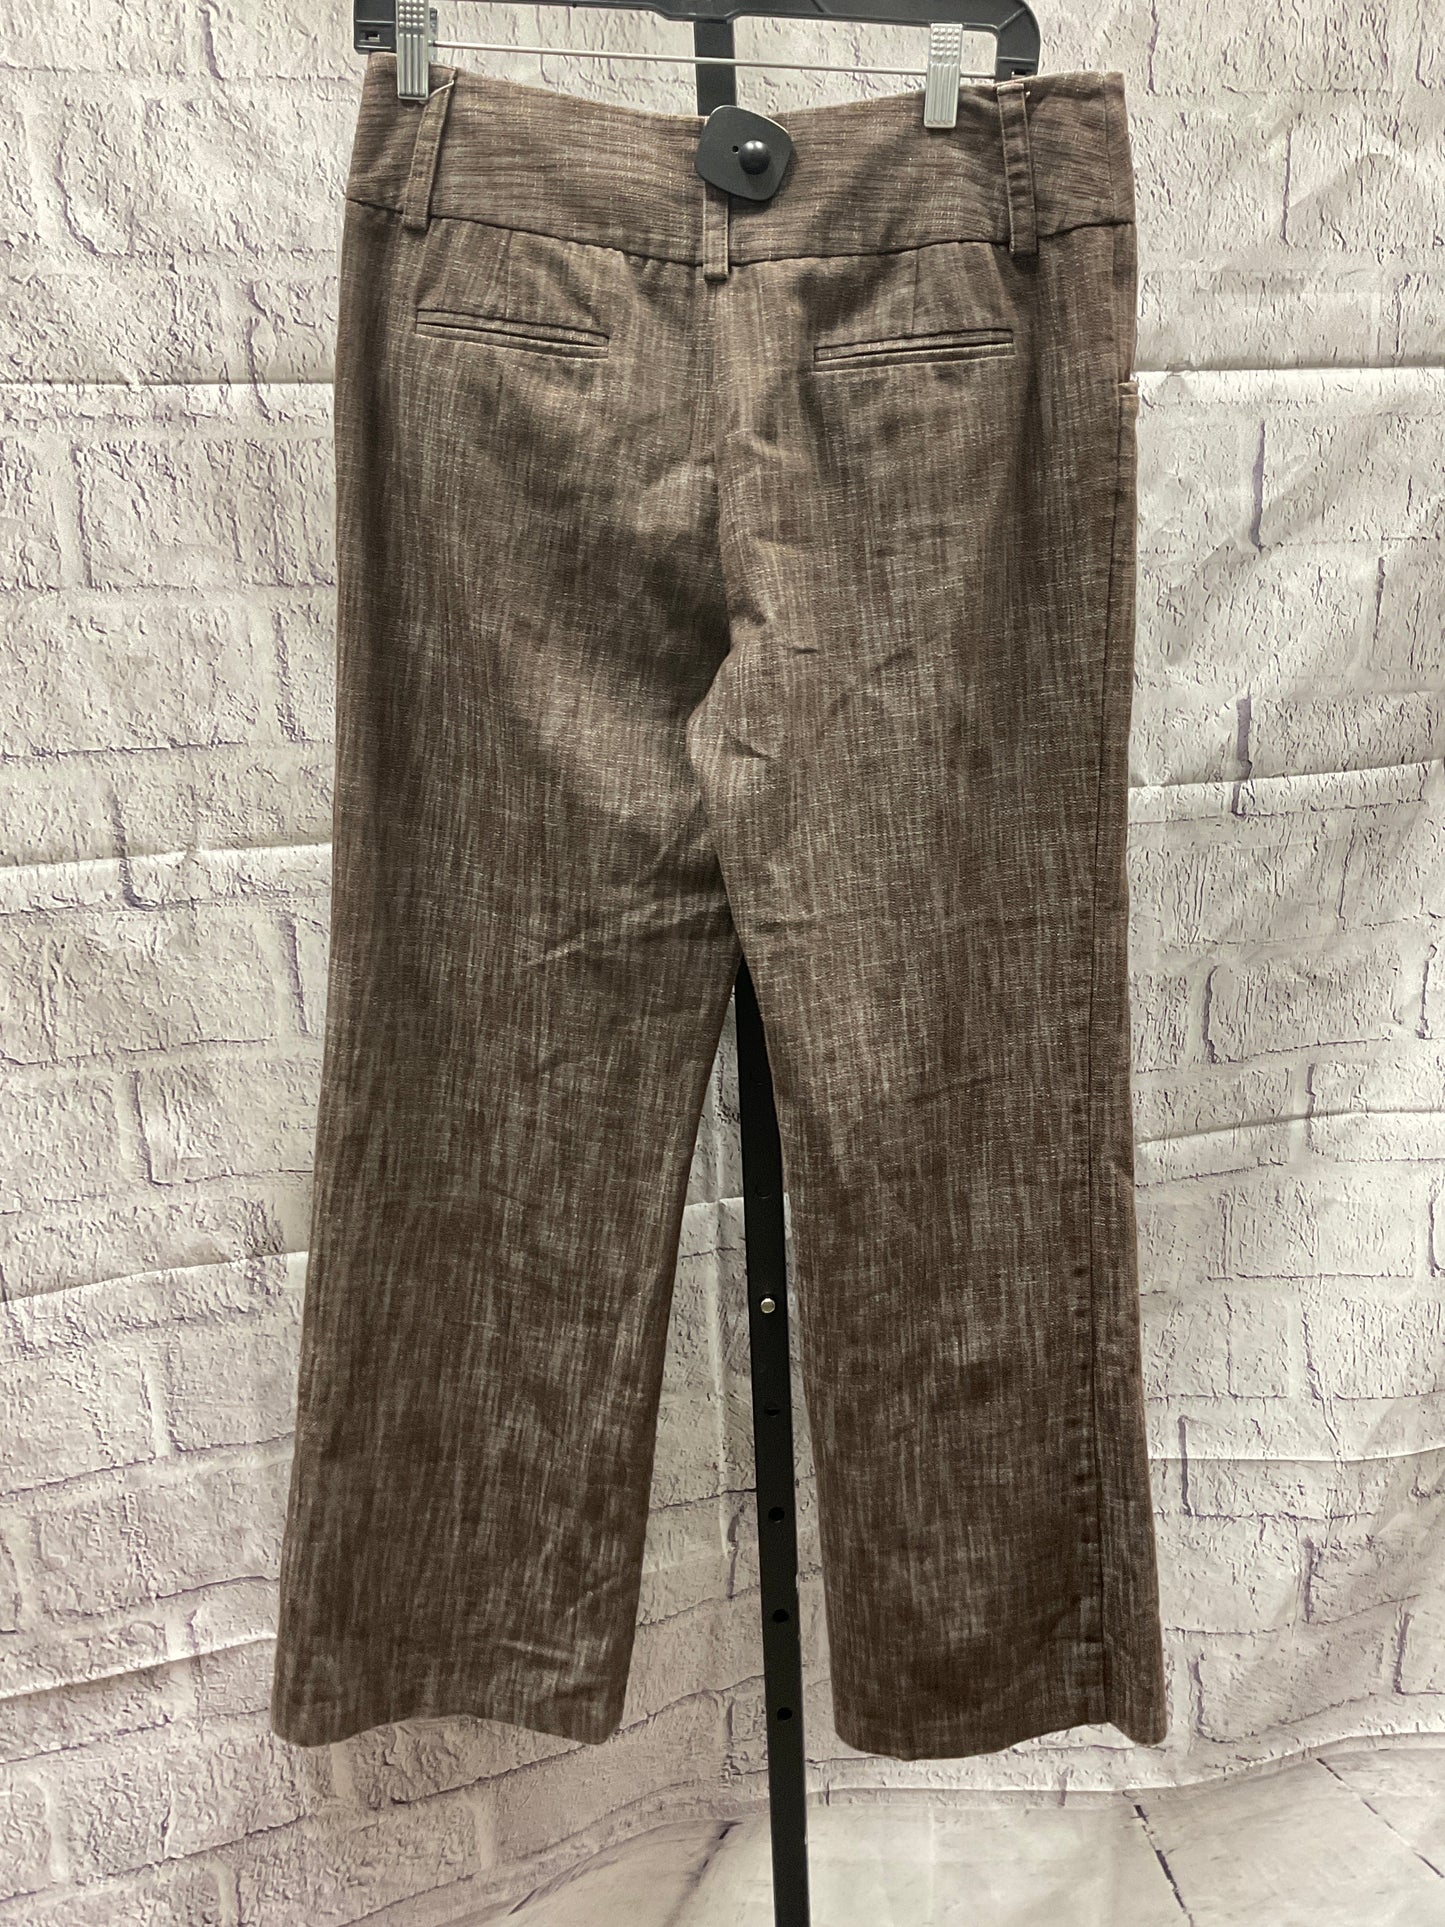 Pants Work/dress By Ab Studio  Size: 8